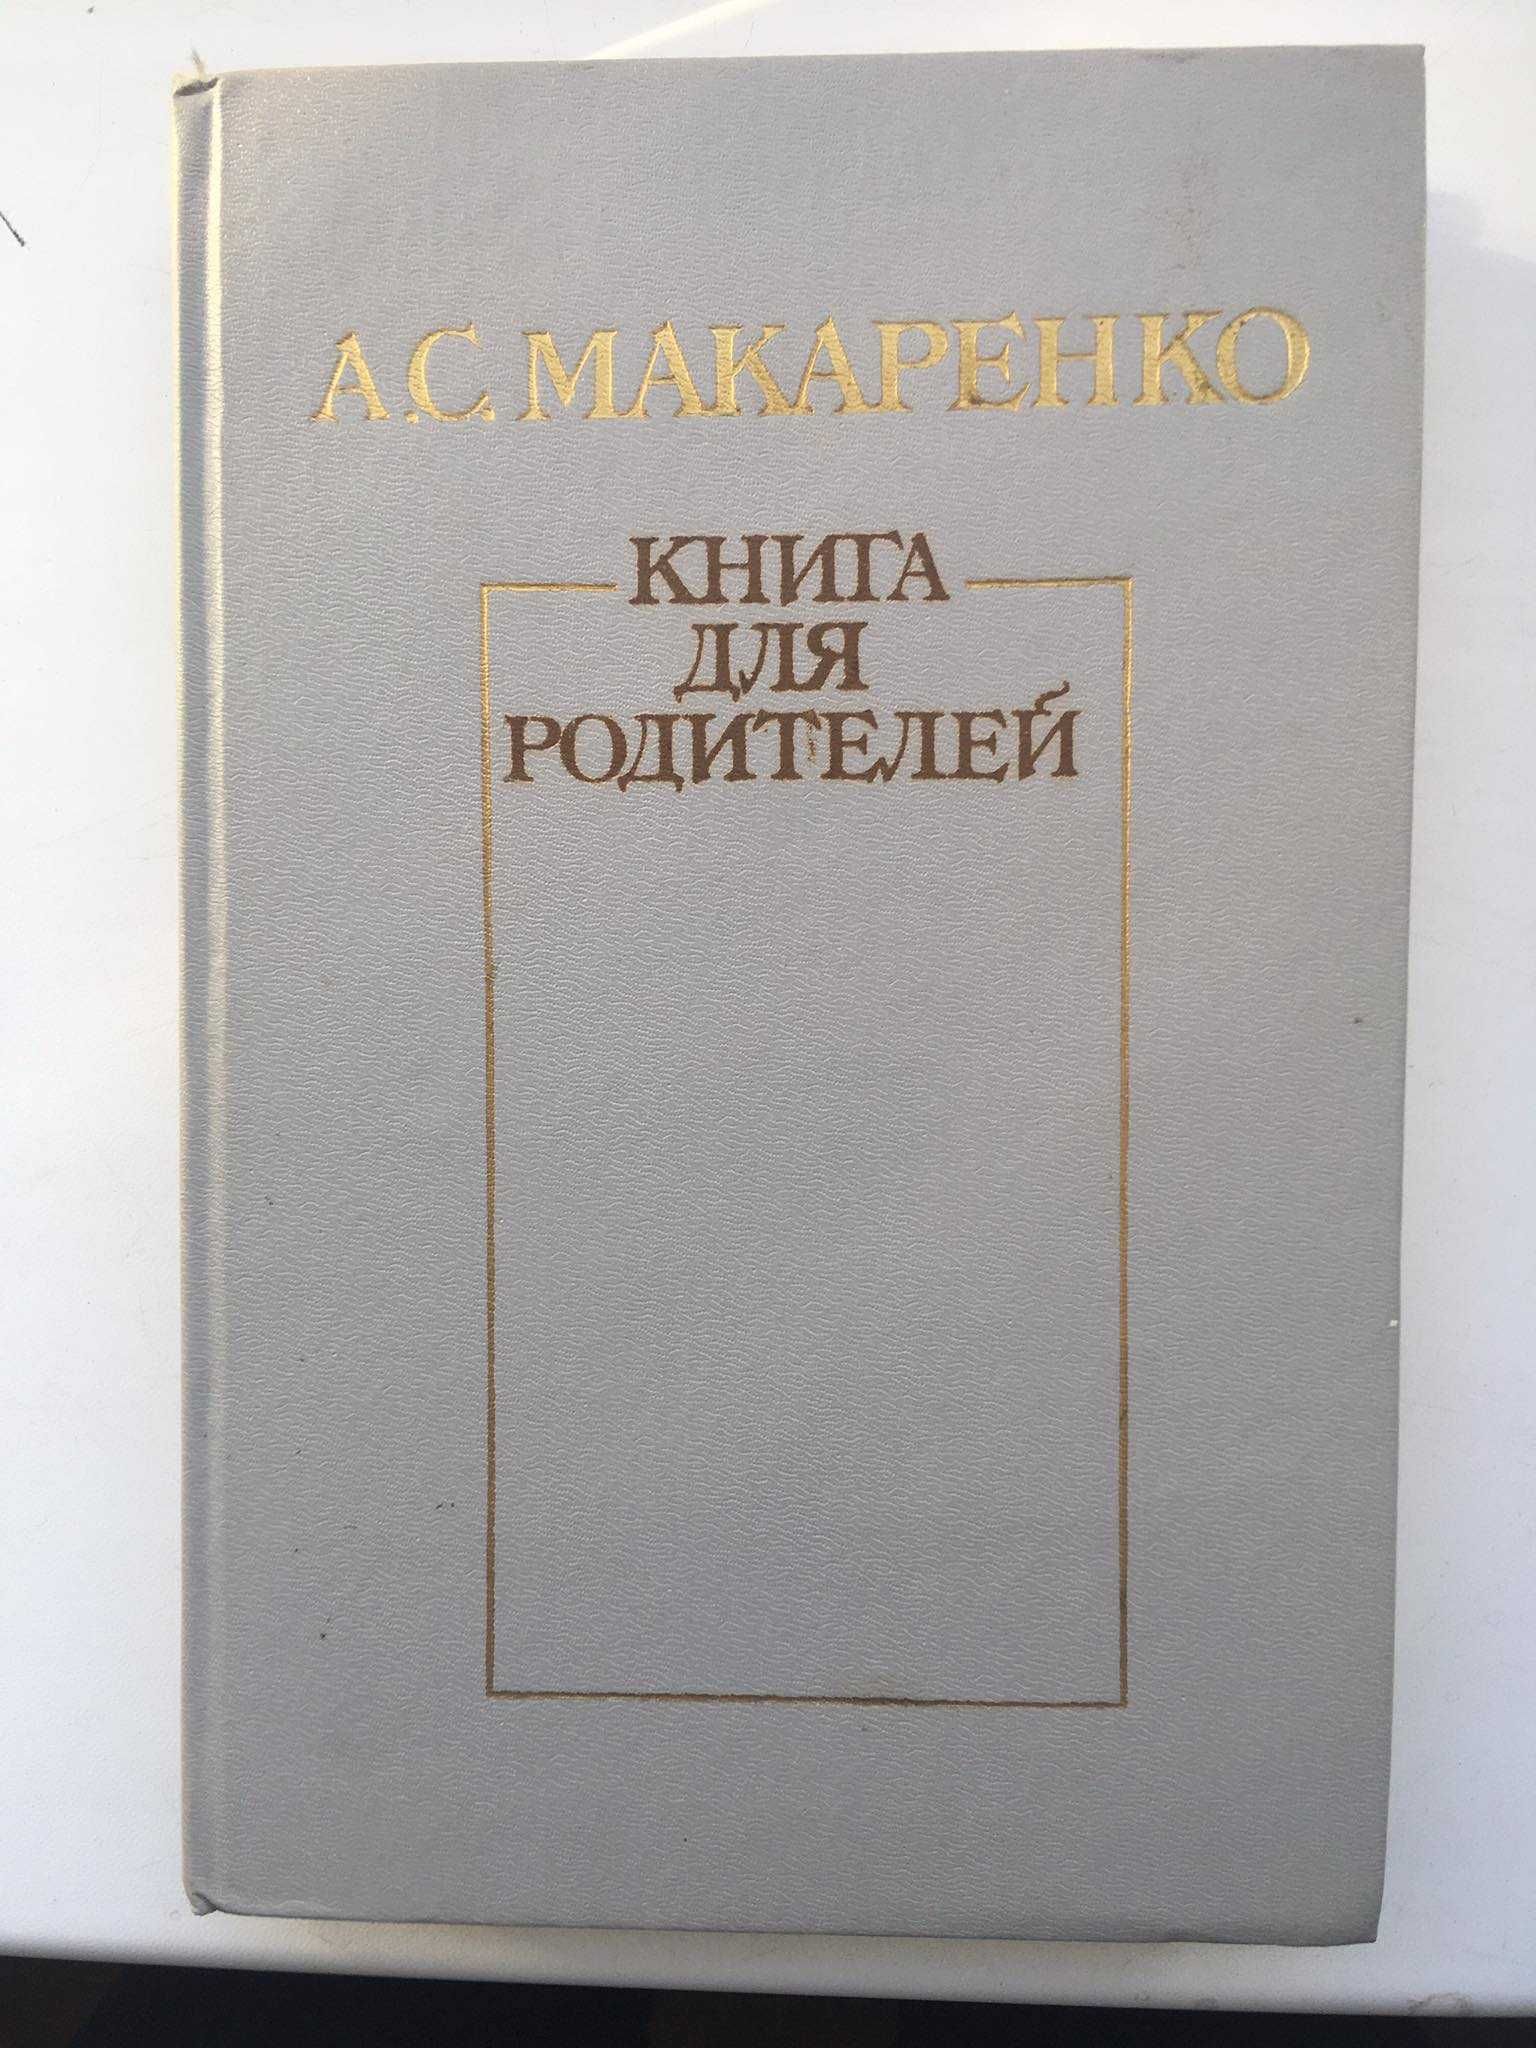 Книга А. С. Макаренко "Книга для родителей"